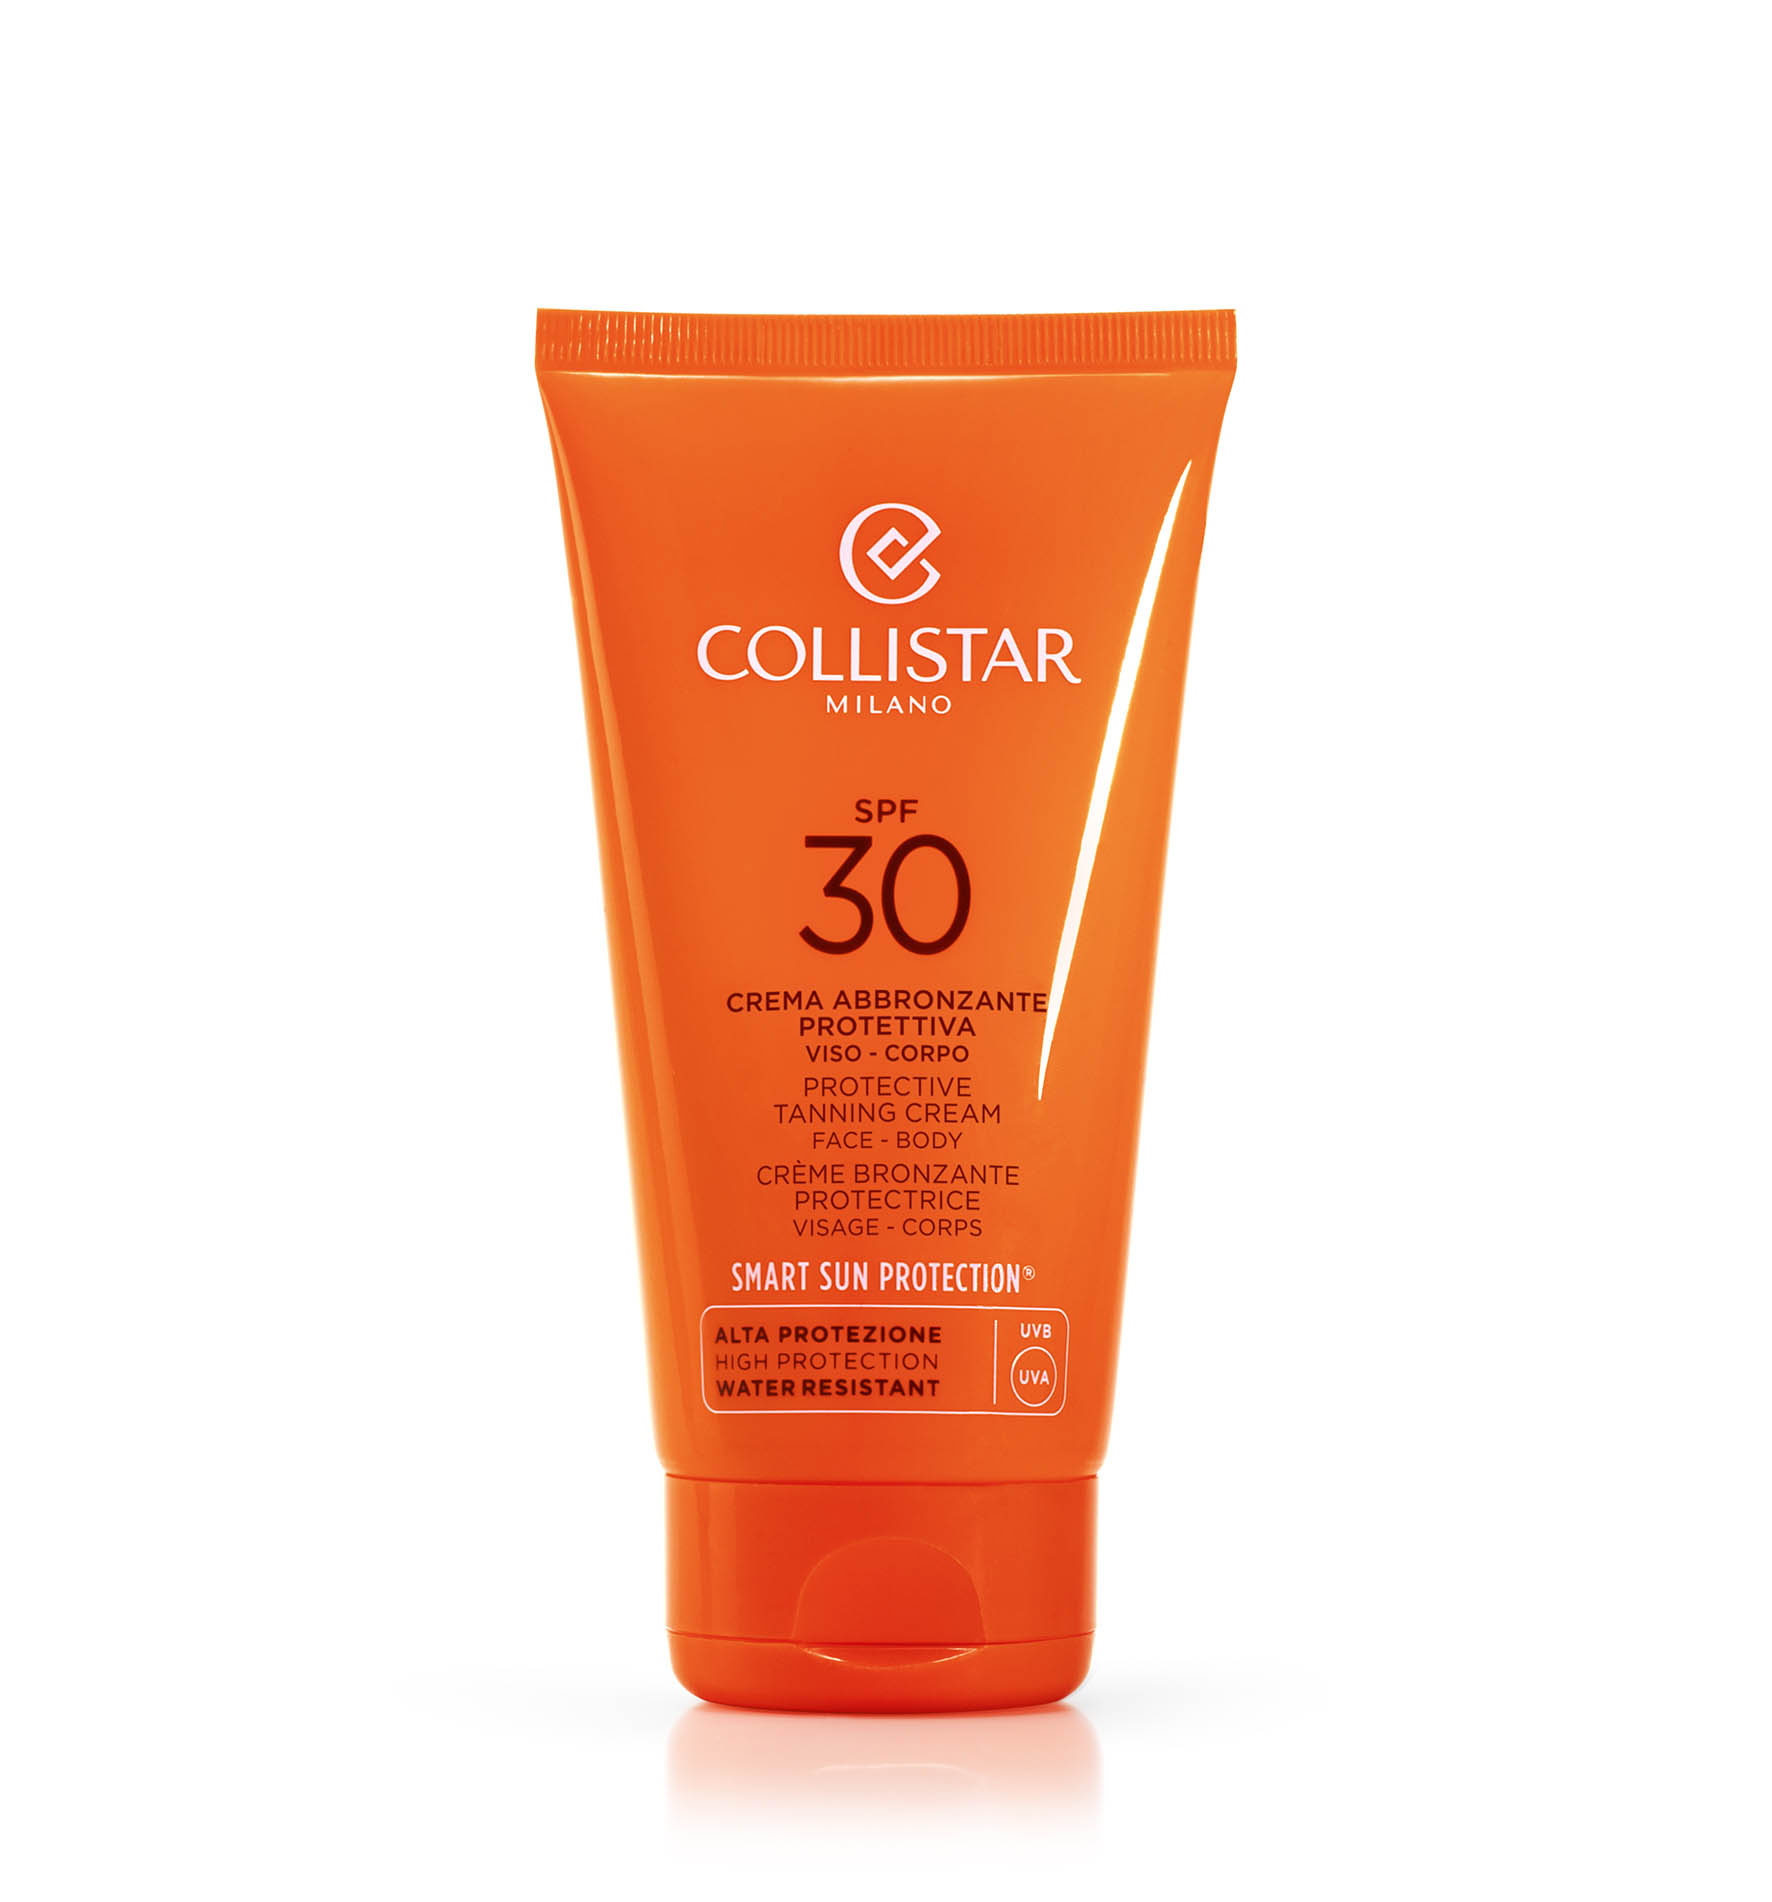 ULTRA PROTECTION TANNING CREAM FACE - BODY SPF 30 - Sun cream | Collistar - Shop Online Ufficiale